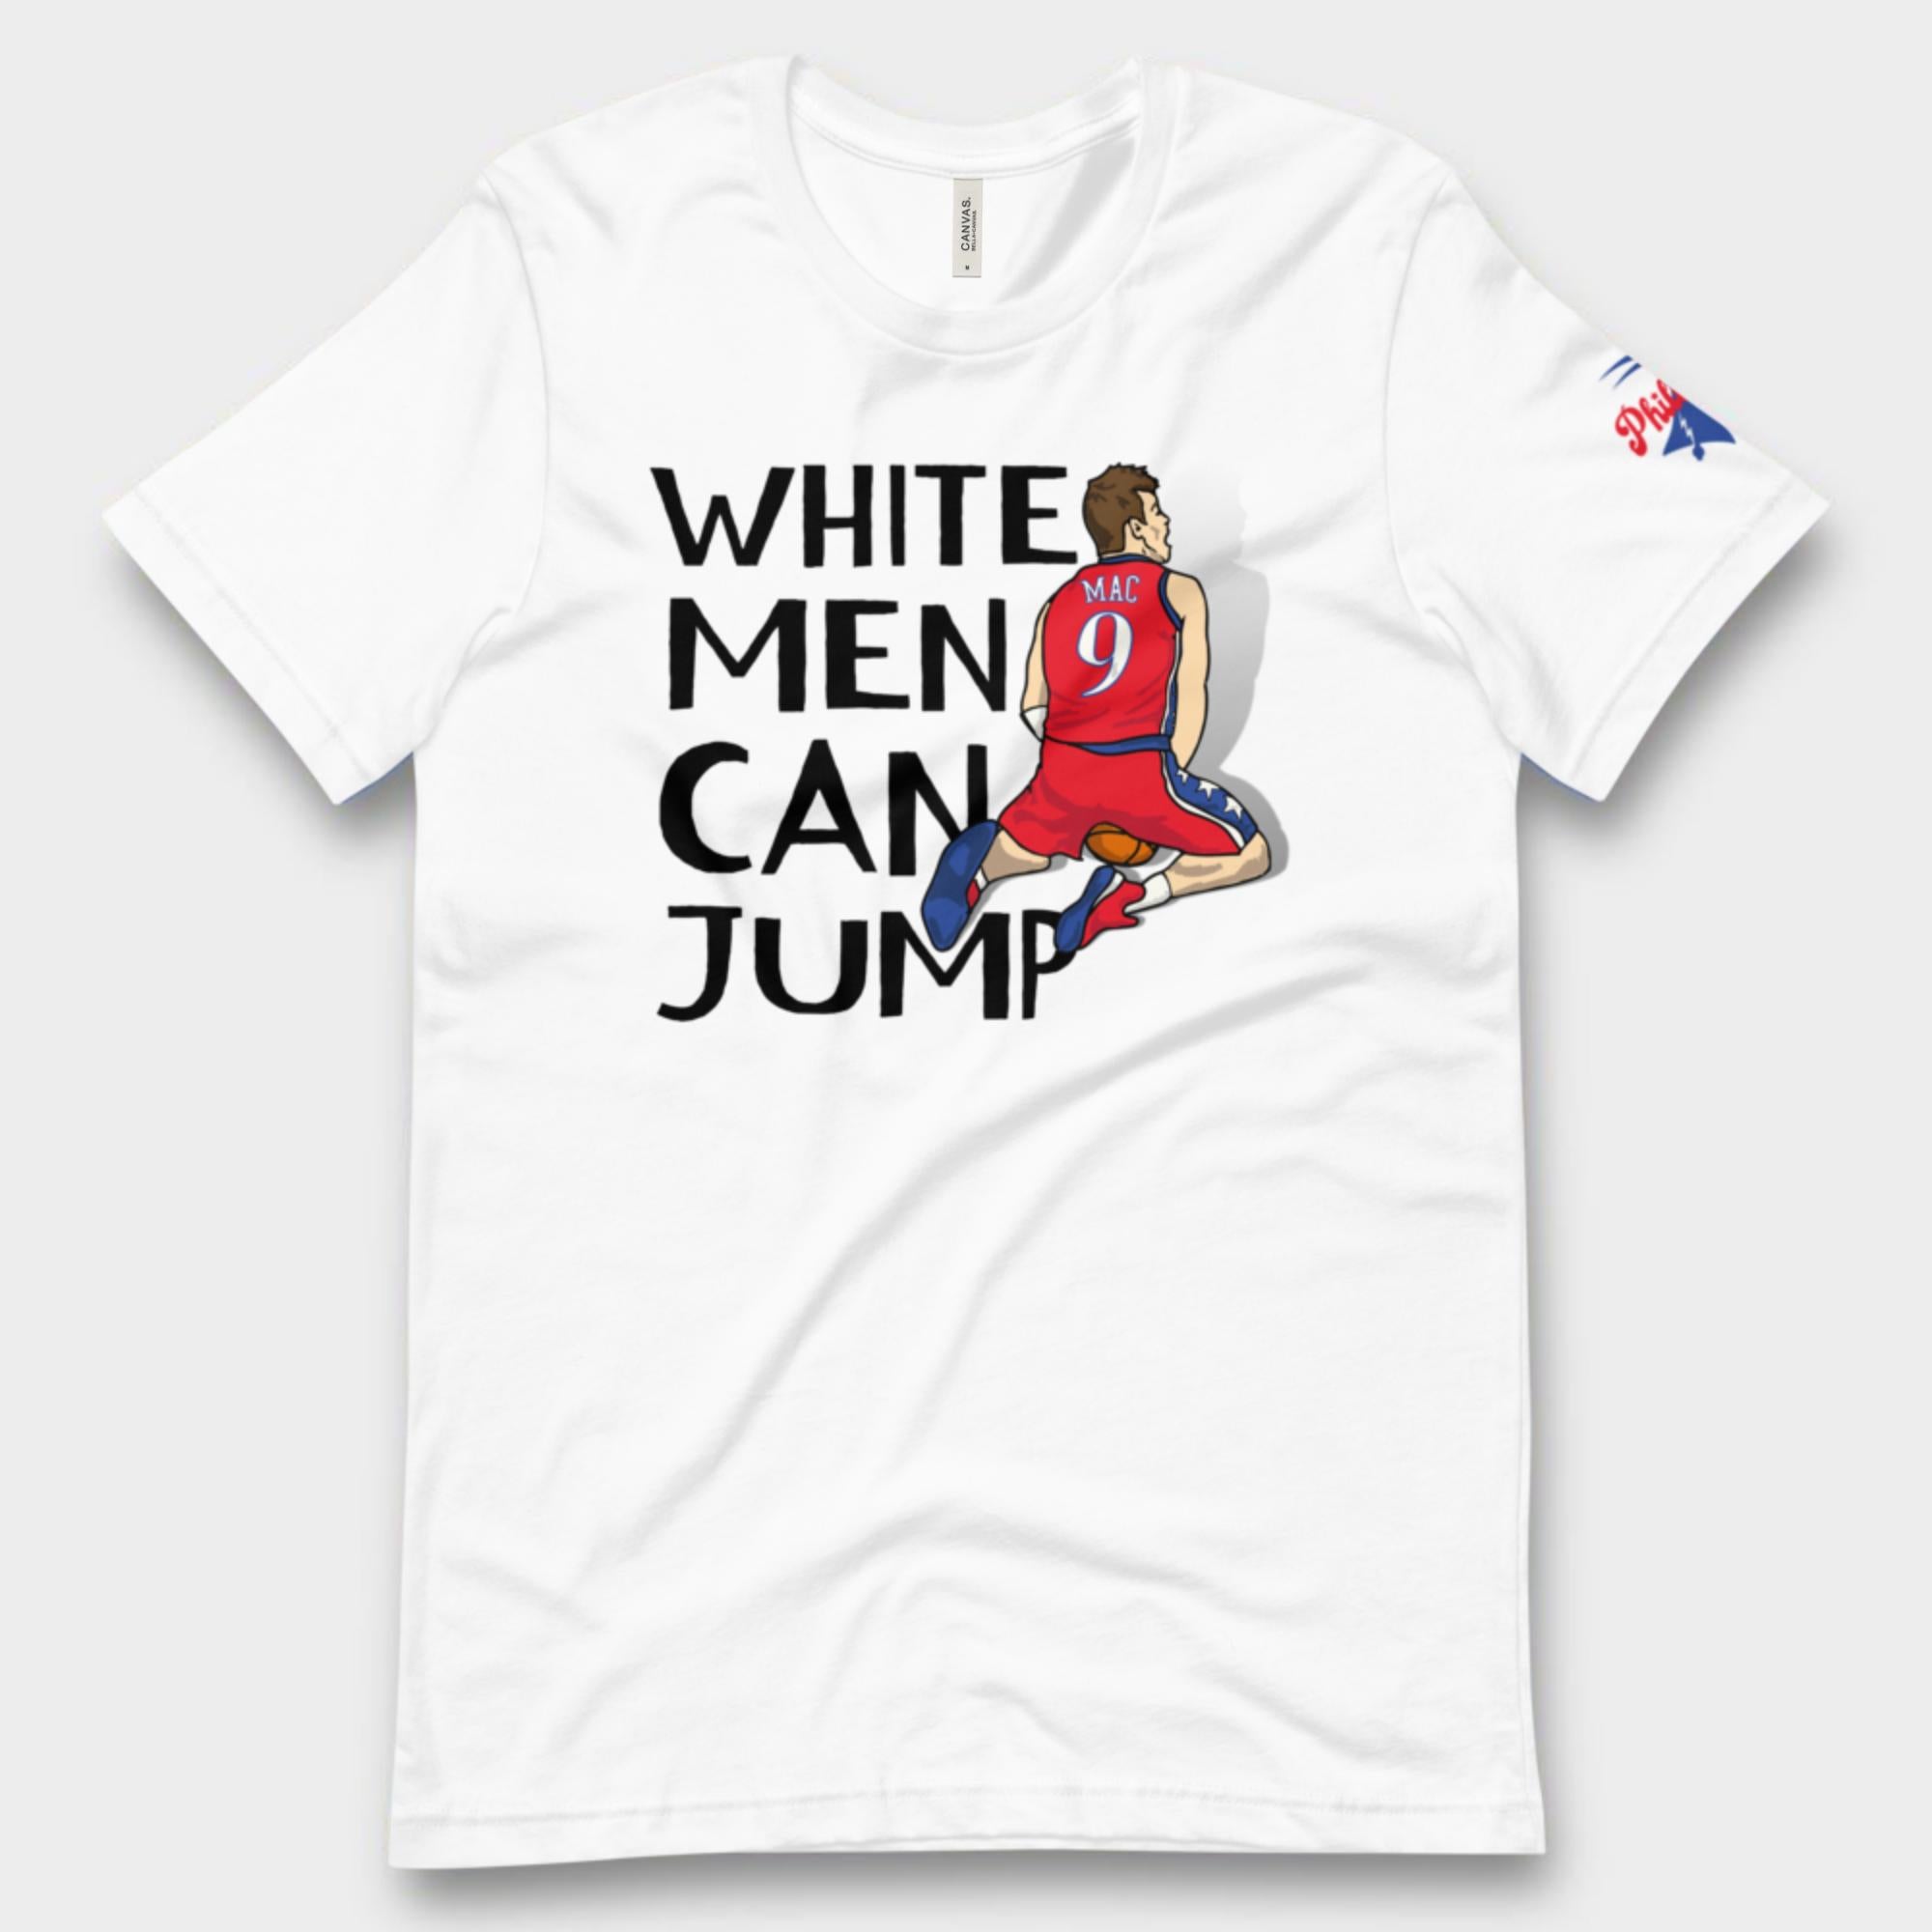 "White Men CAN Jump" Tee